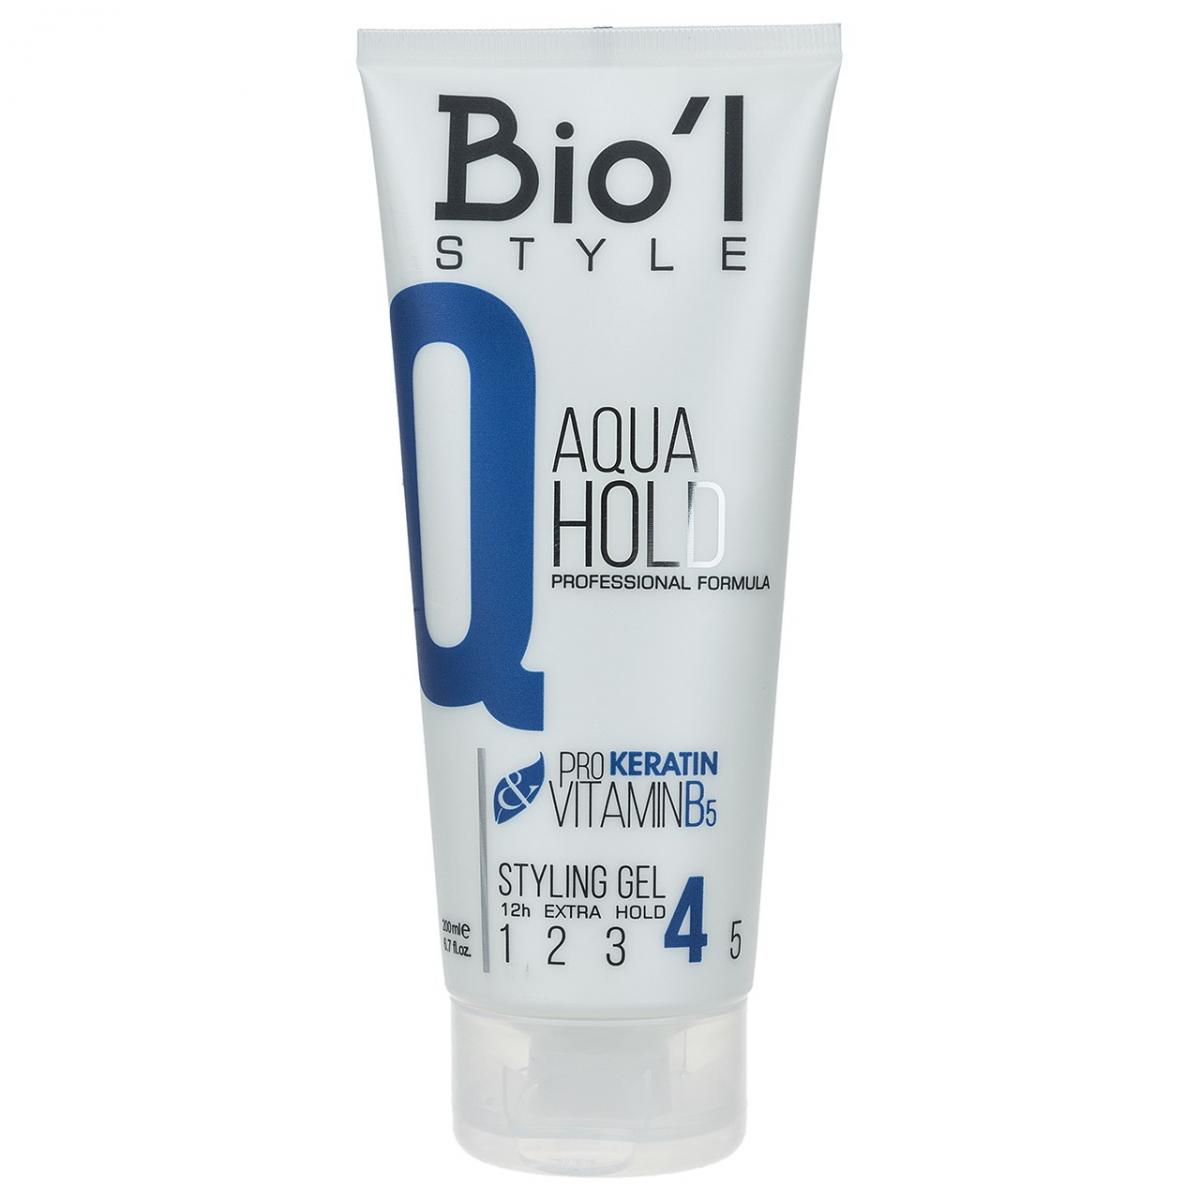 ژل موی آکوا ( با قدرت نگه دارندگی قوی) - Biol AQUA Hold Hair Gel